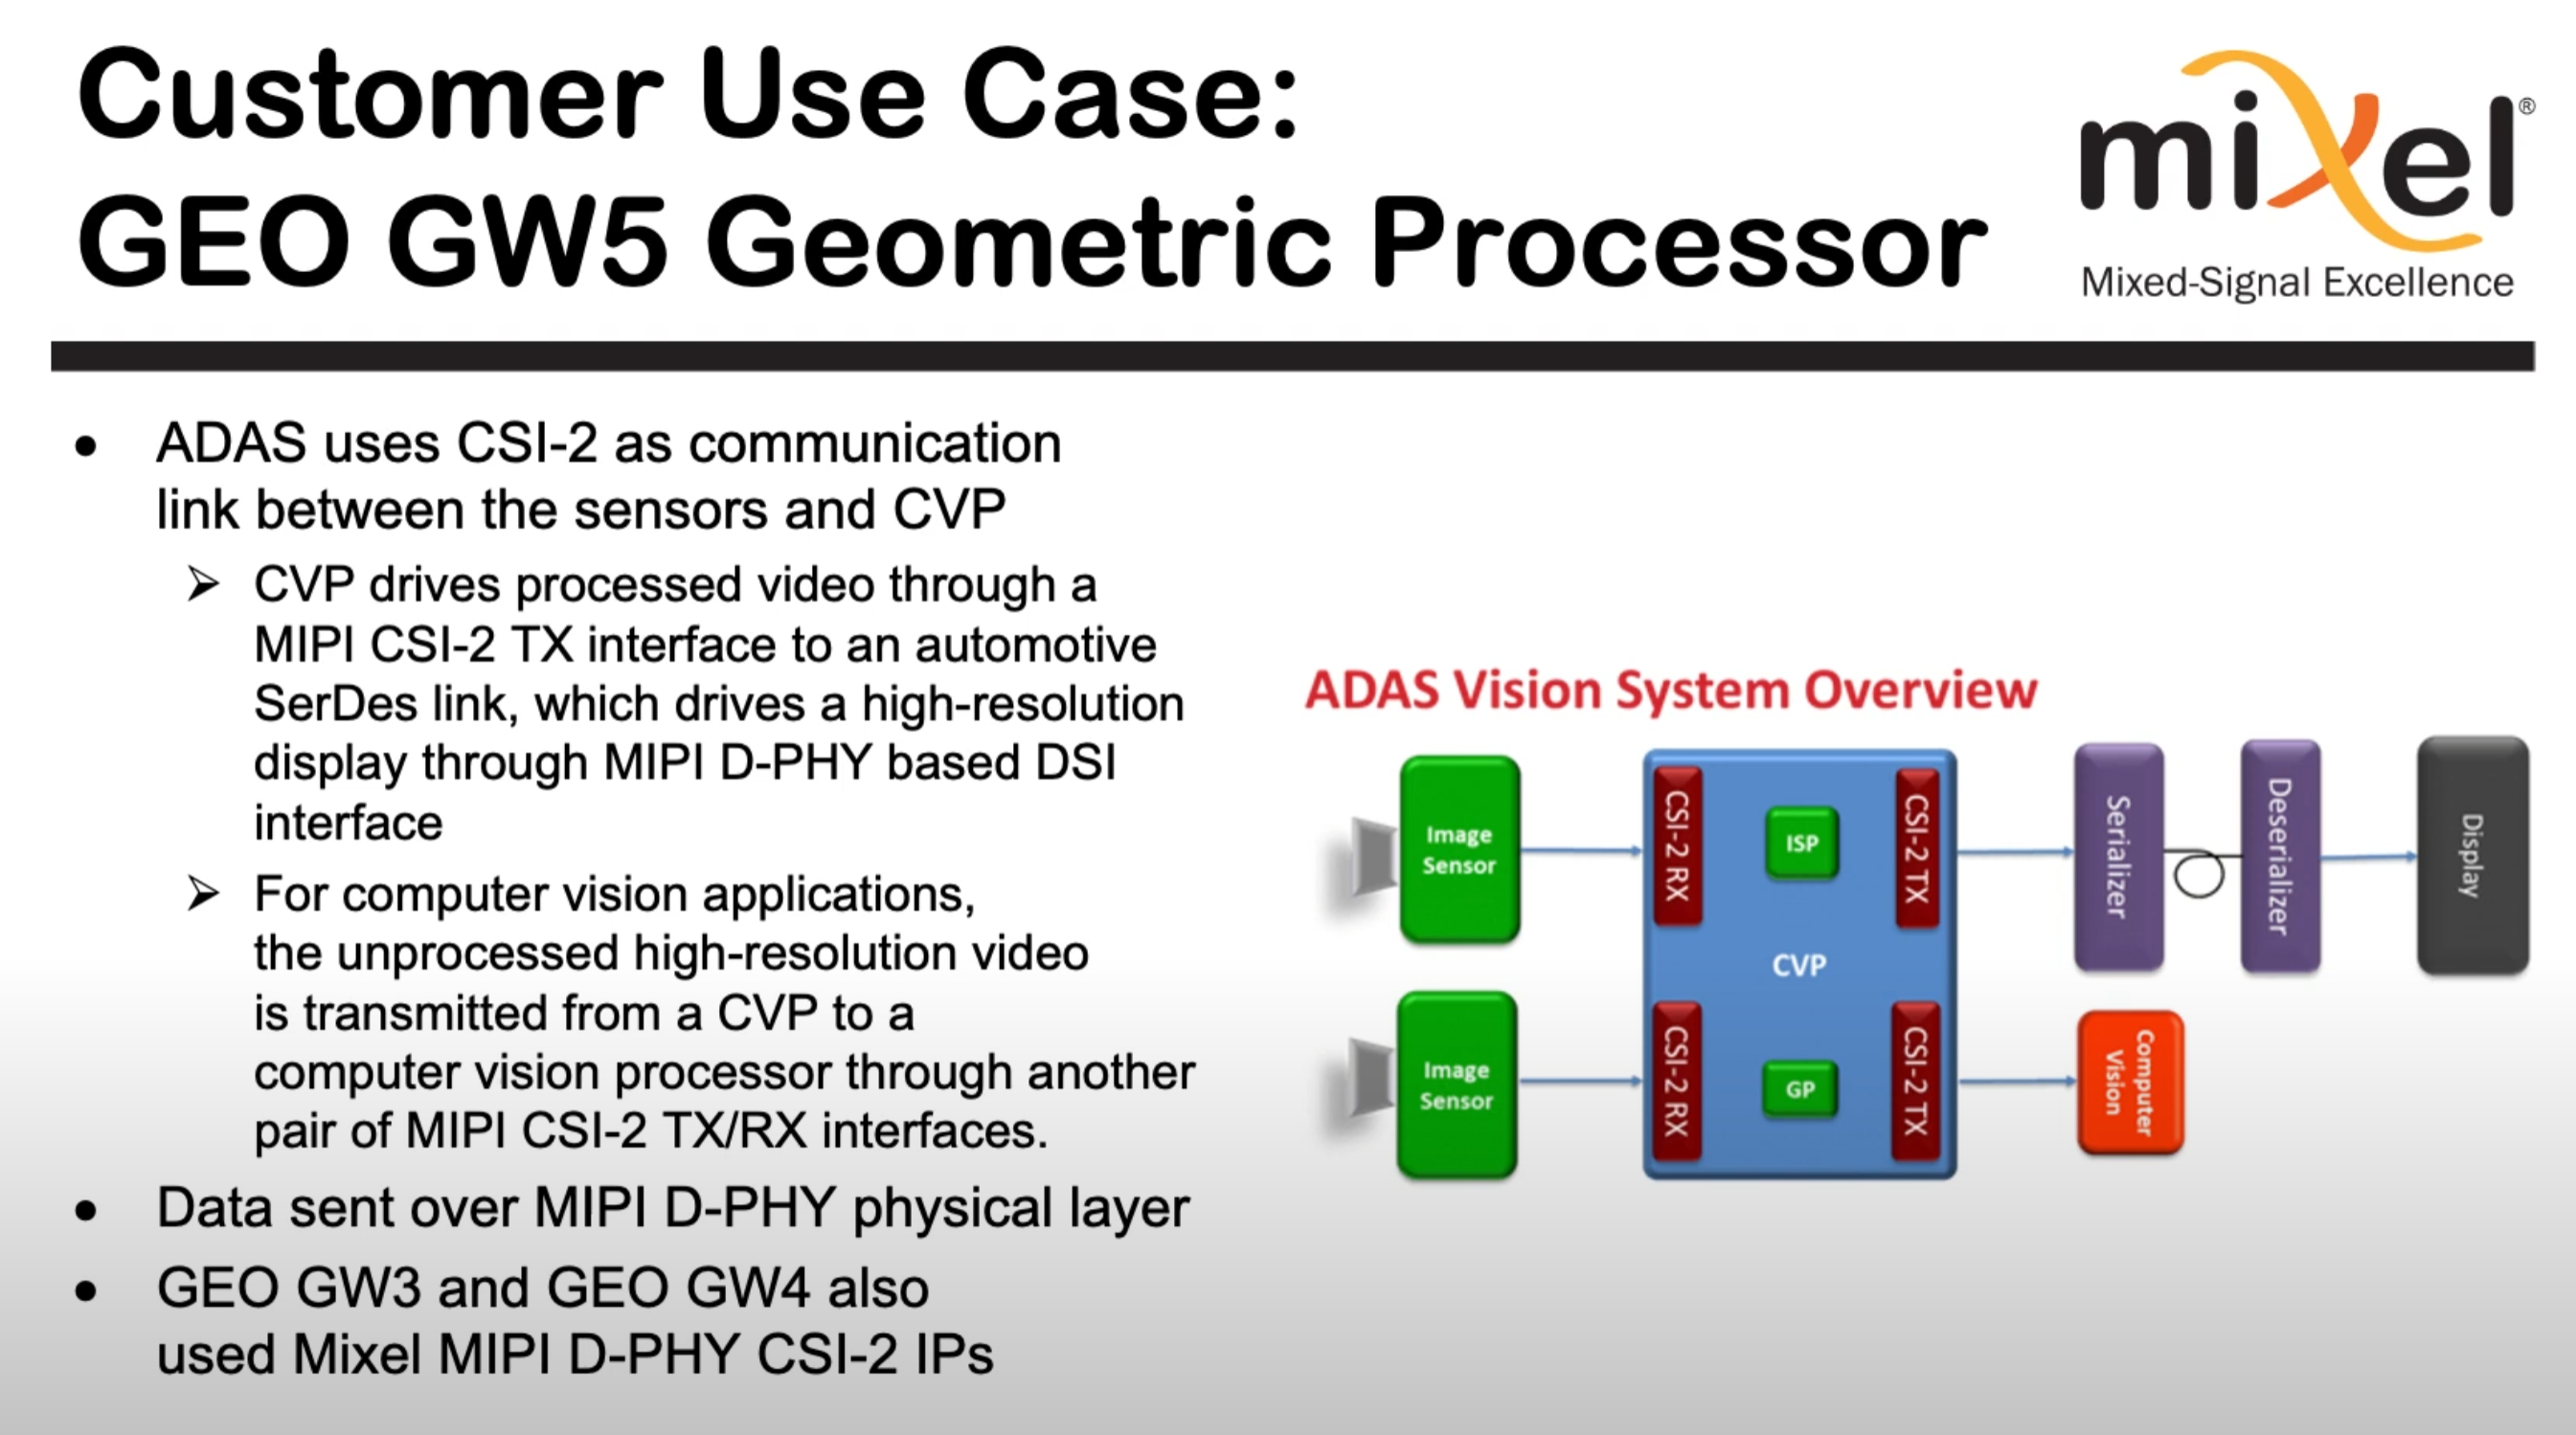 GEO GW5 Geometric Processor